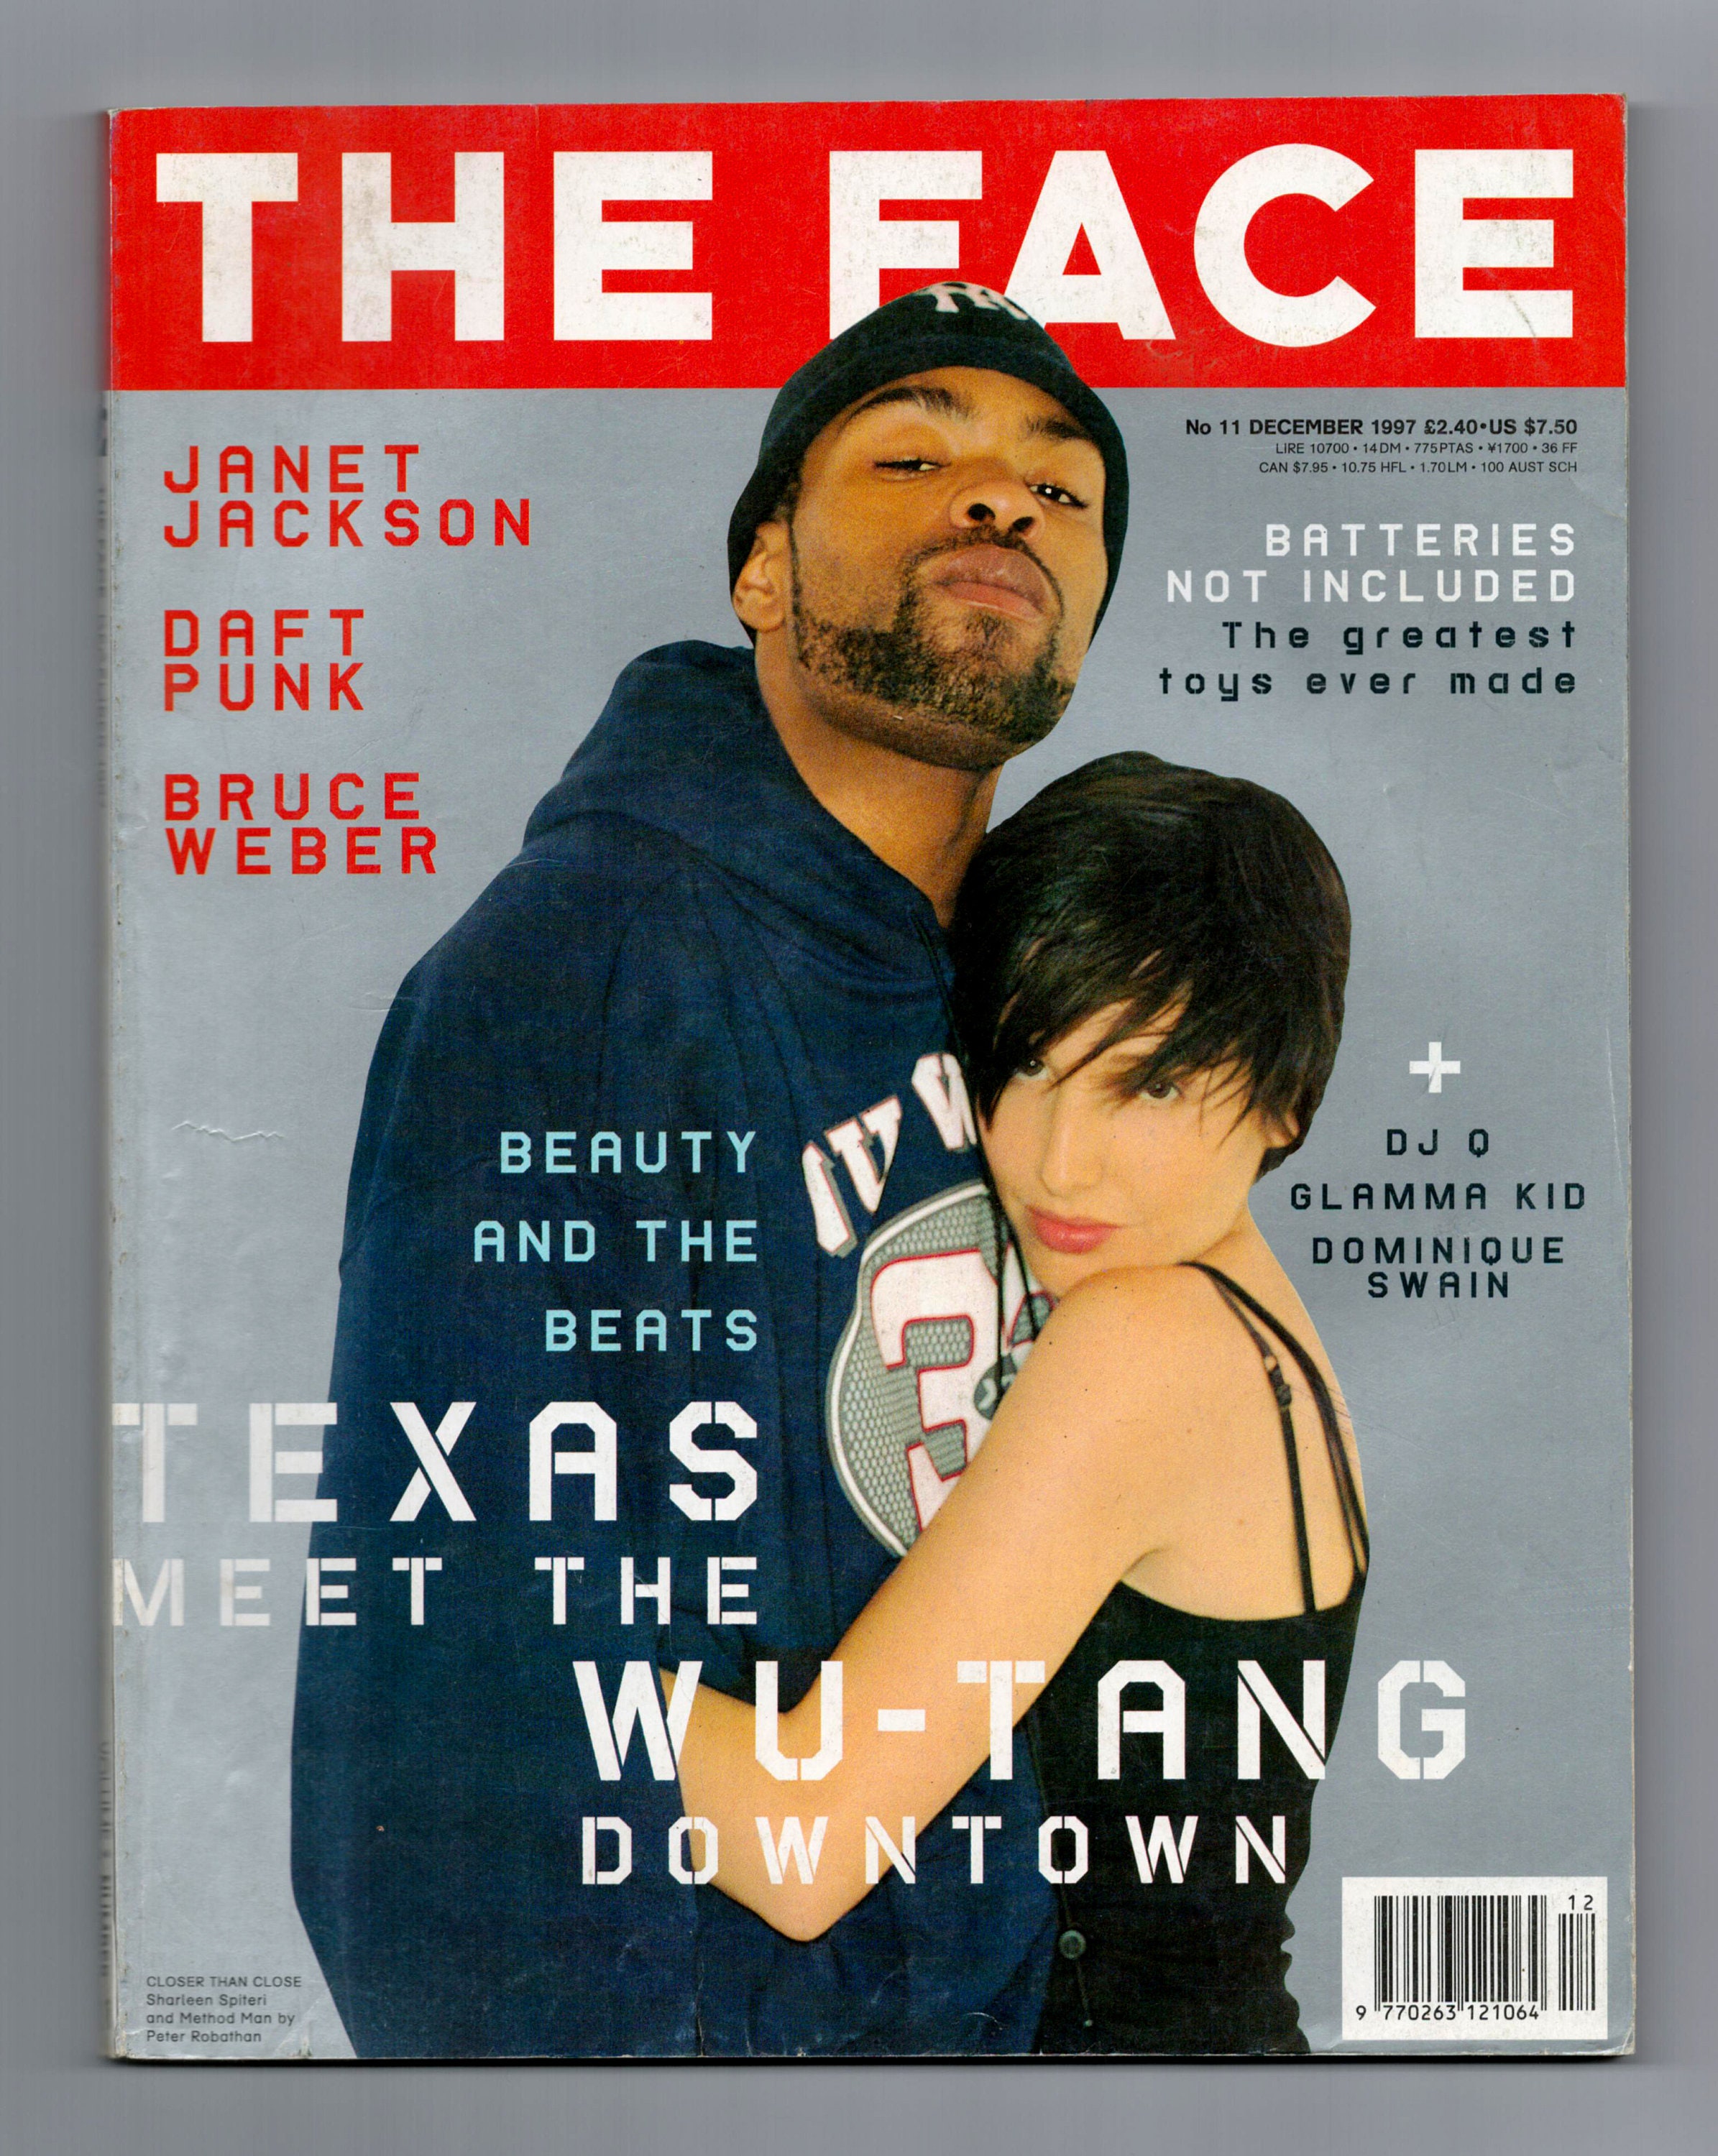 Face Magazine April 2003 Vol 3 No 75 Justin Timberlake Naomi